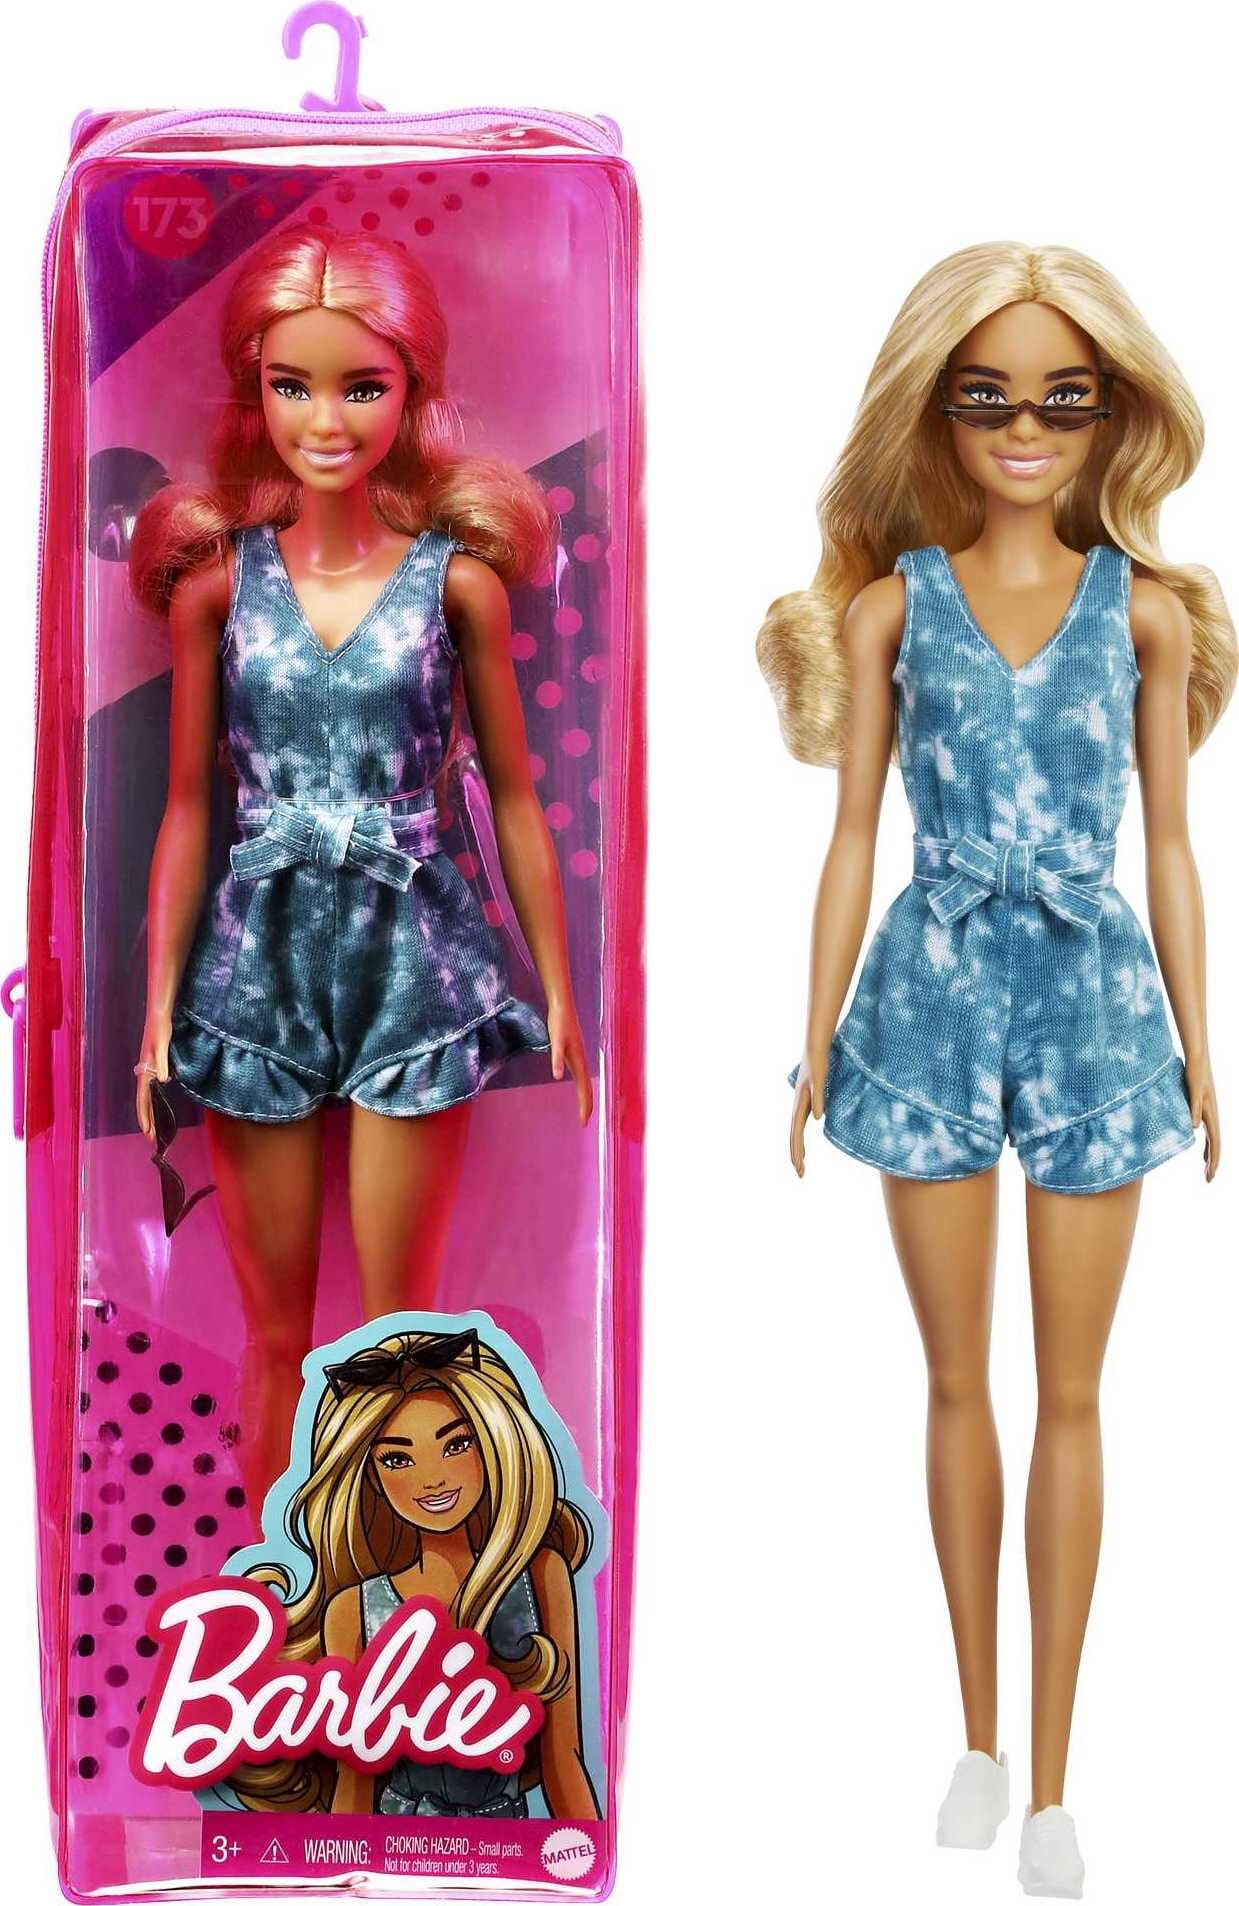 Glitz Girlz 5 Princess Dolls with sparkly dresses toys playset games dolls 